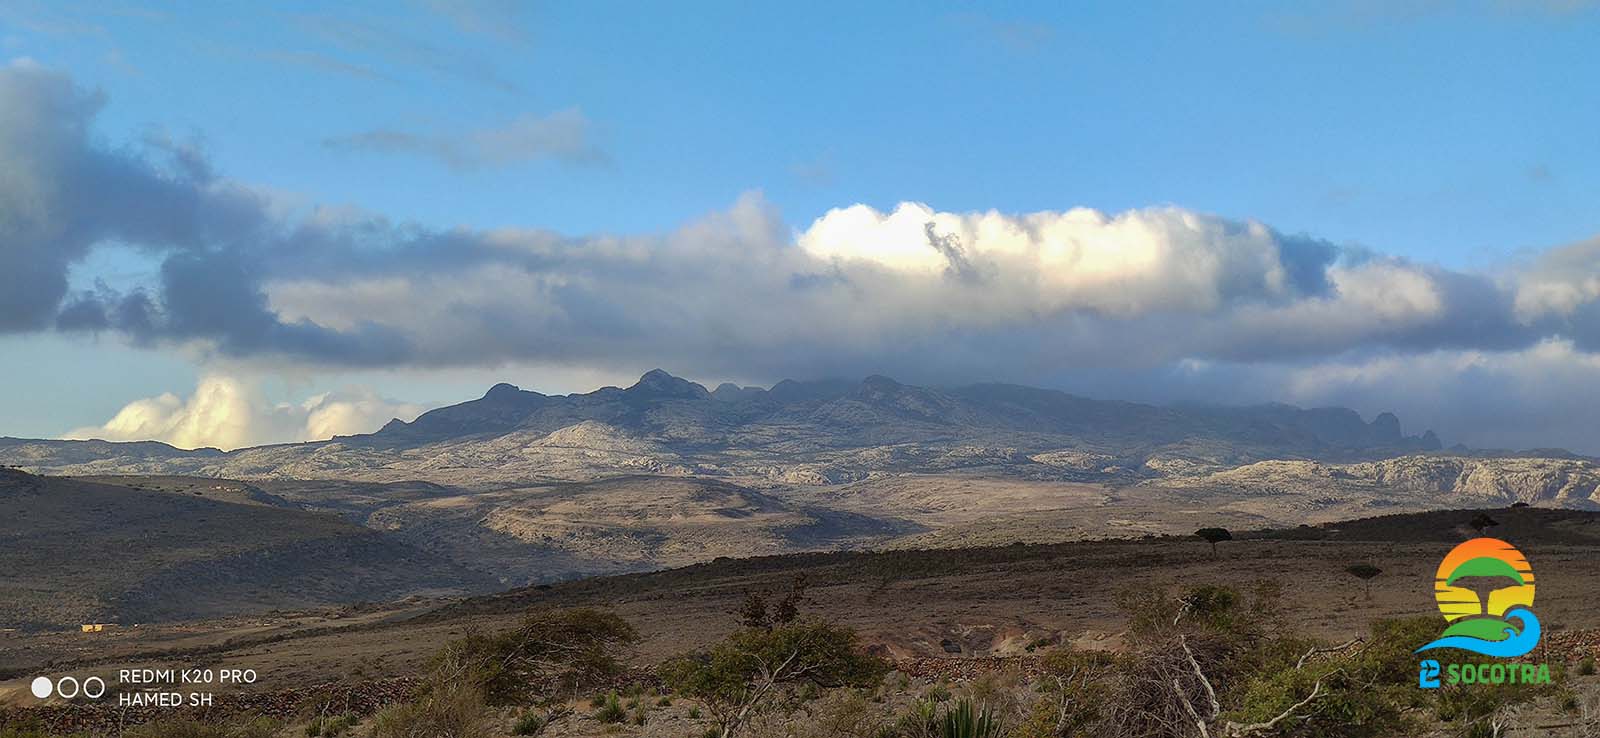 View from Diksam plateau, Socotra Island